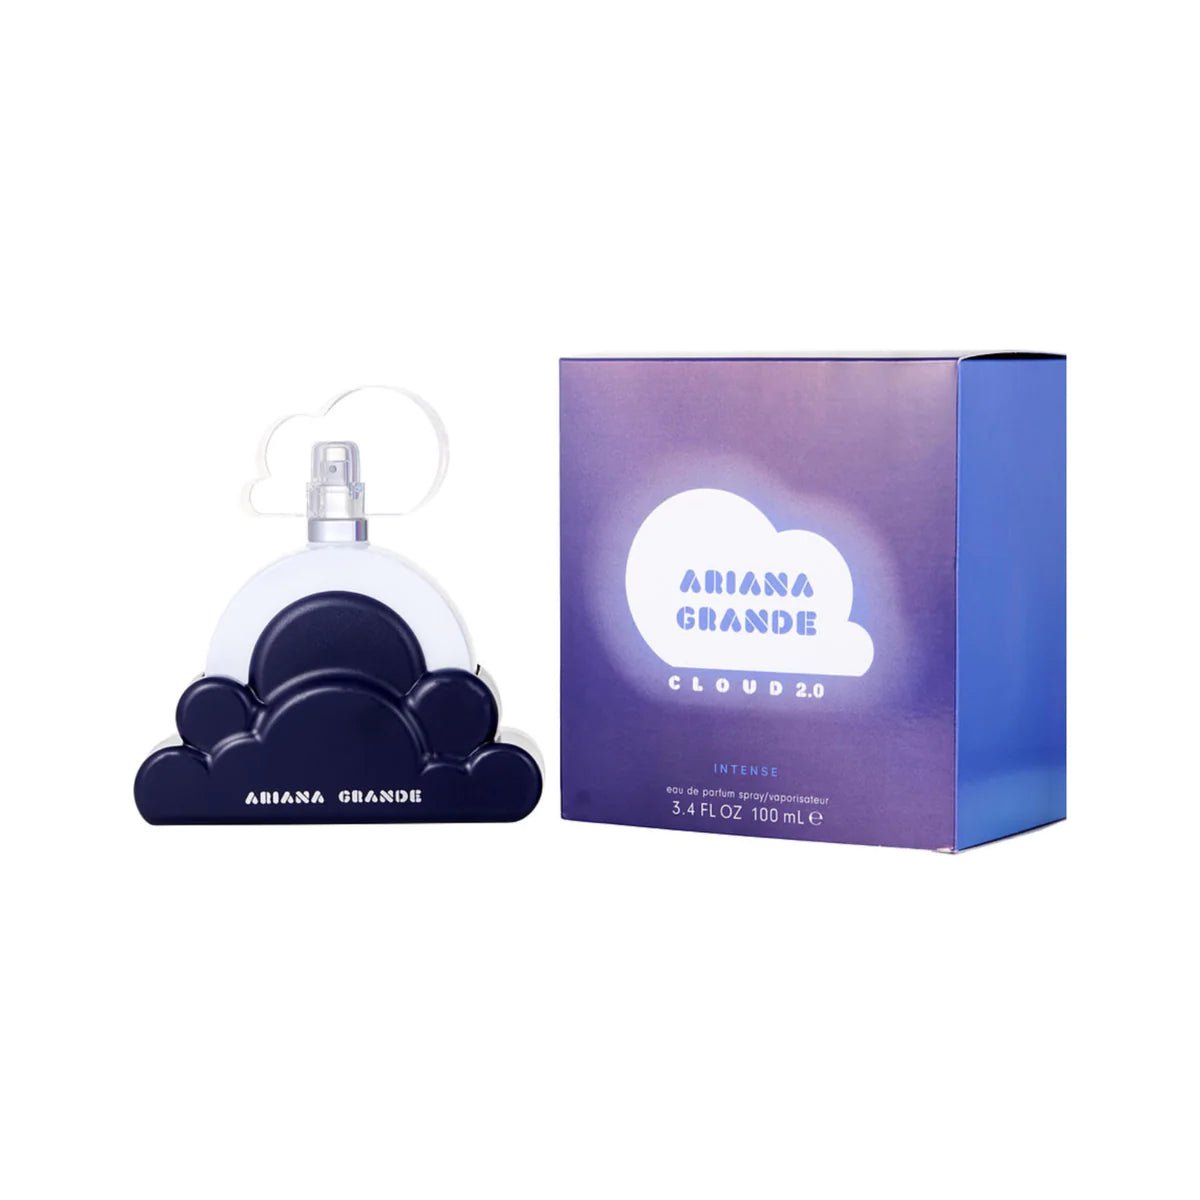 Cloud 2.0 Intense Eau De Parfum Spray by Ariana Grande, Product image 1